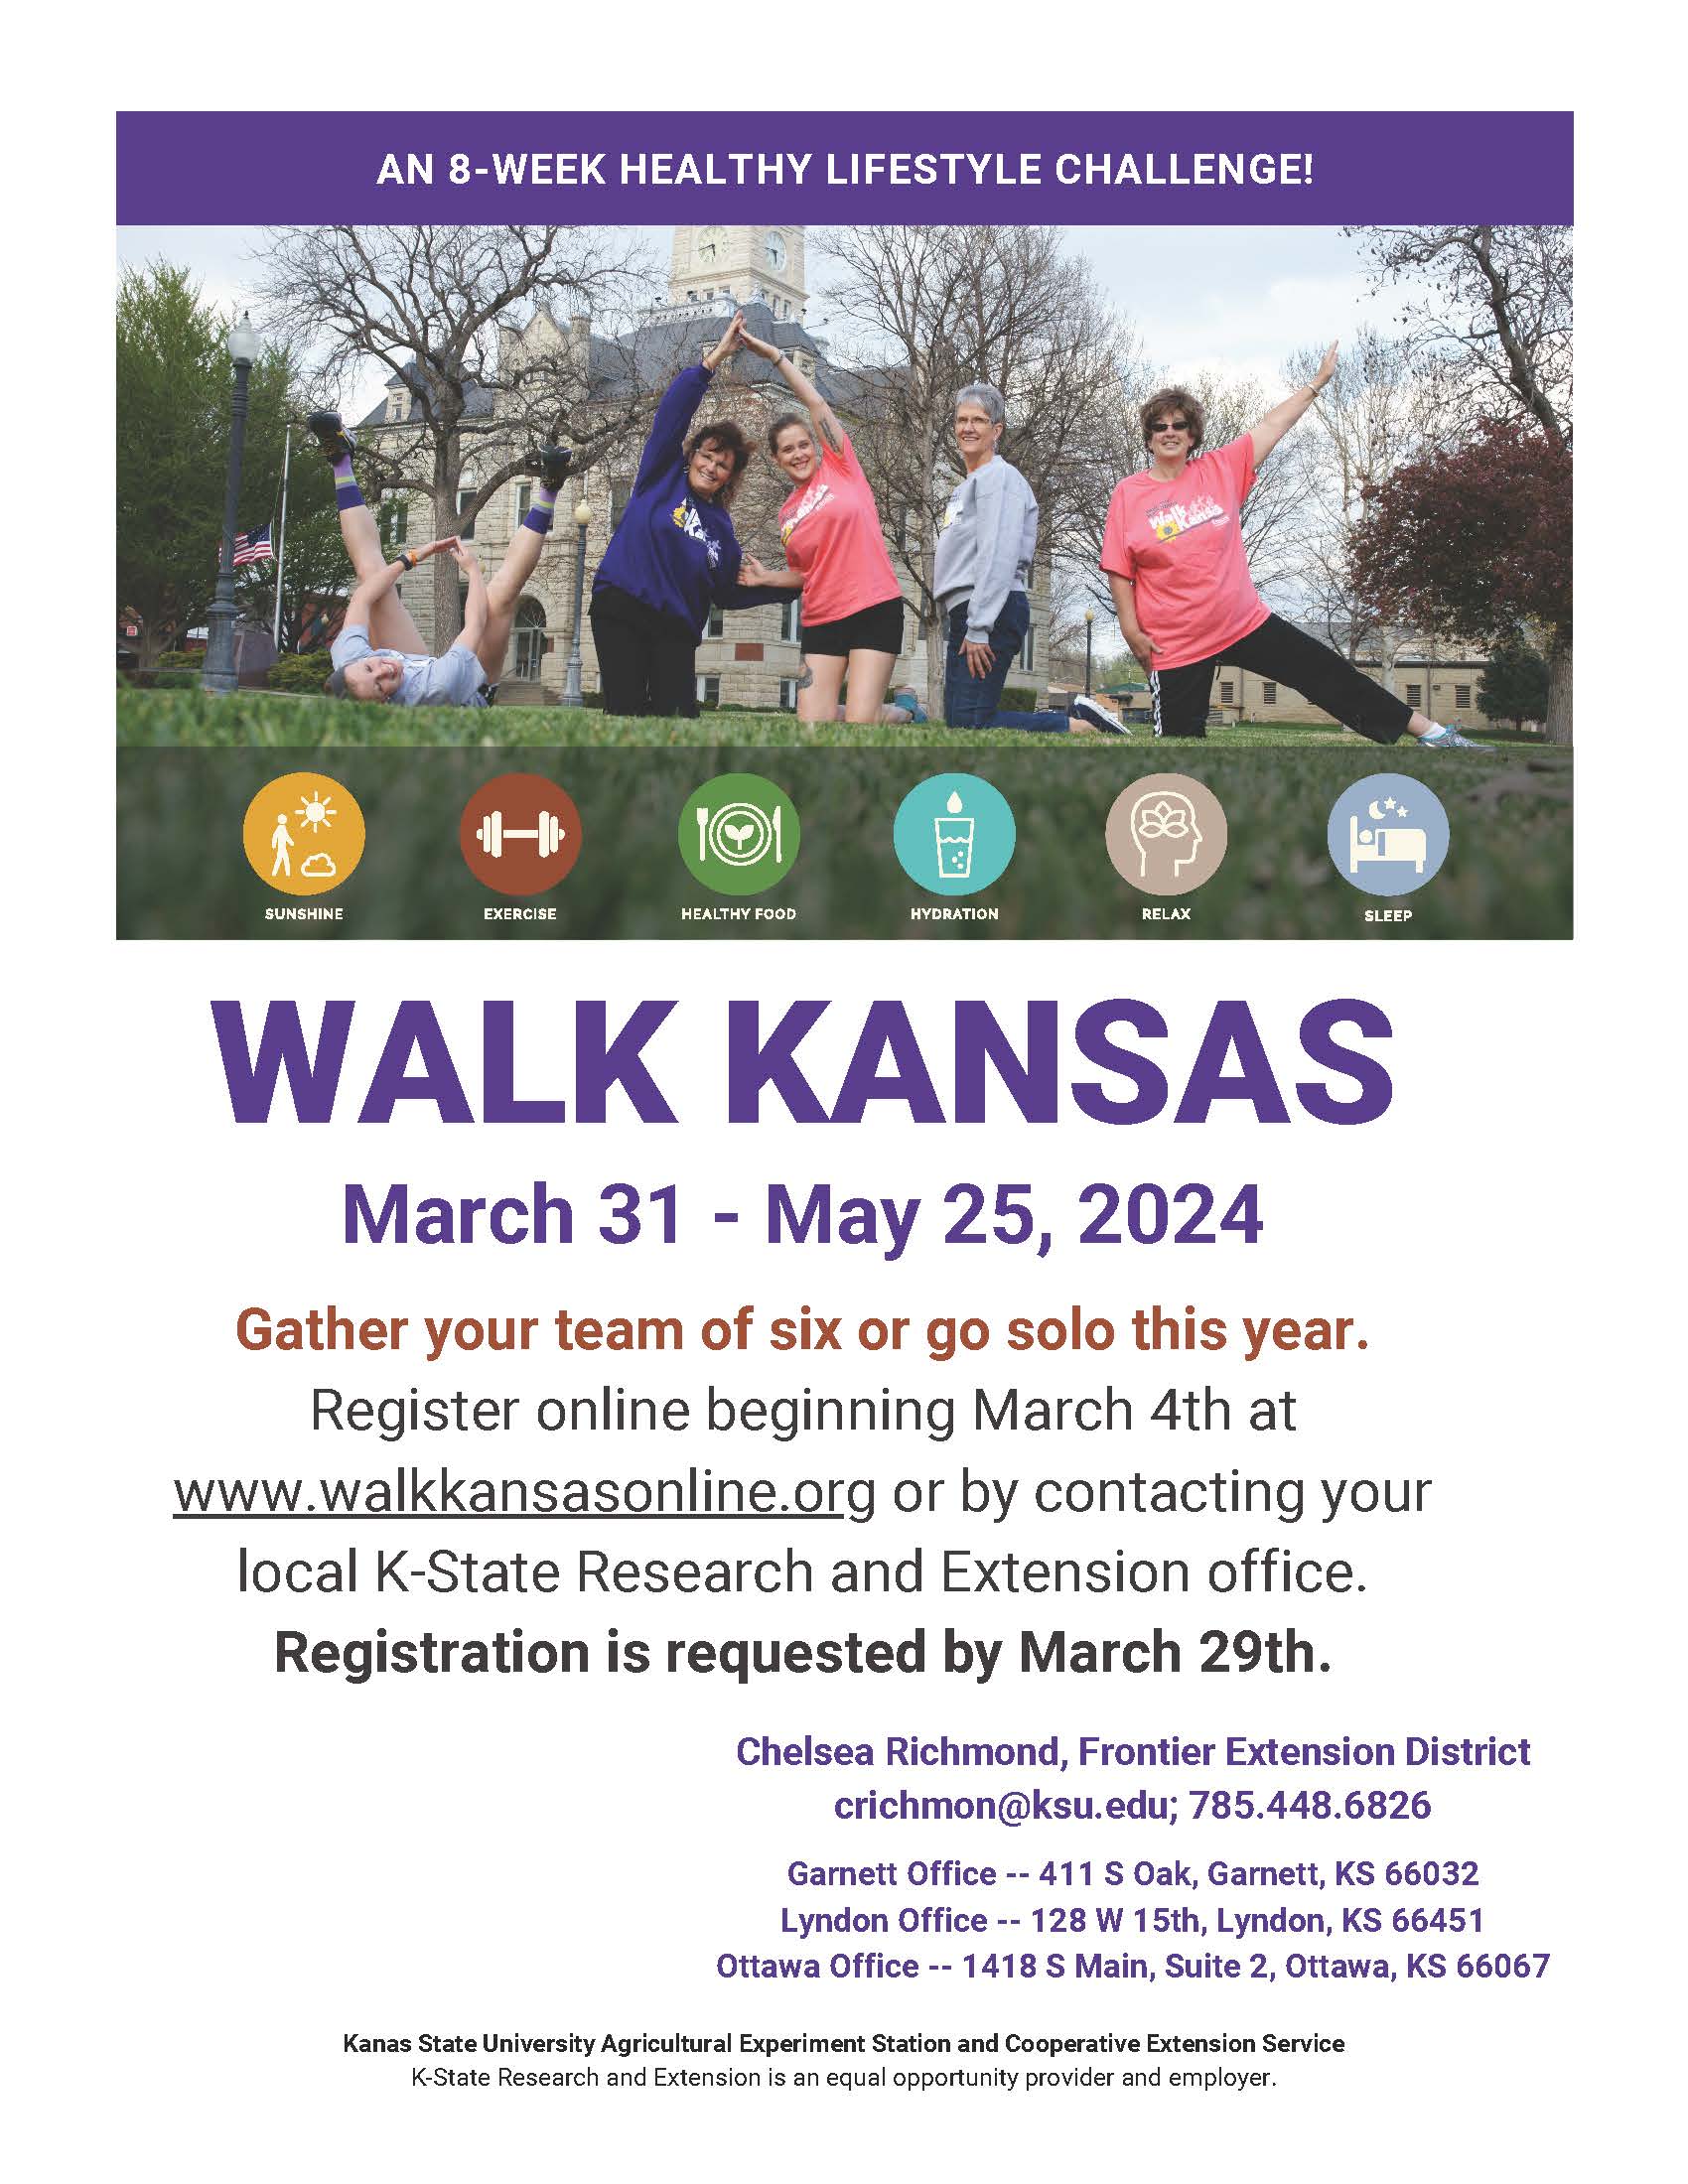 Walk Kansas flyer